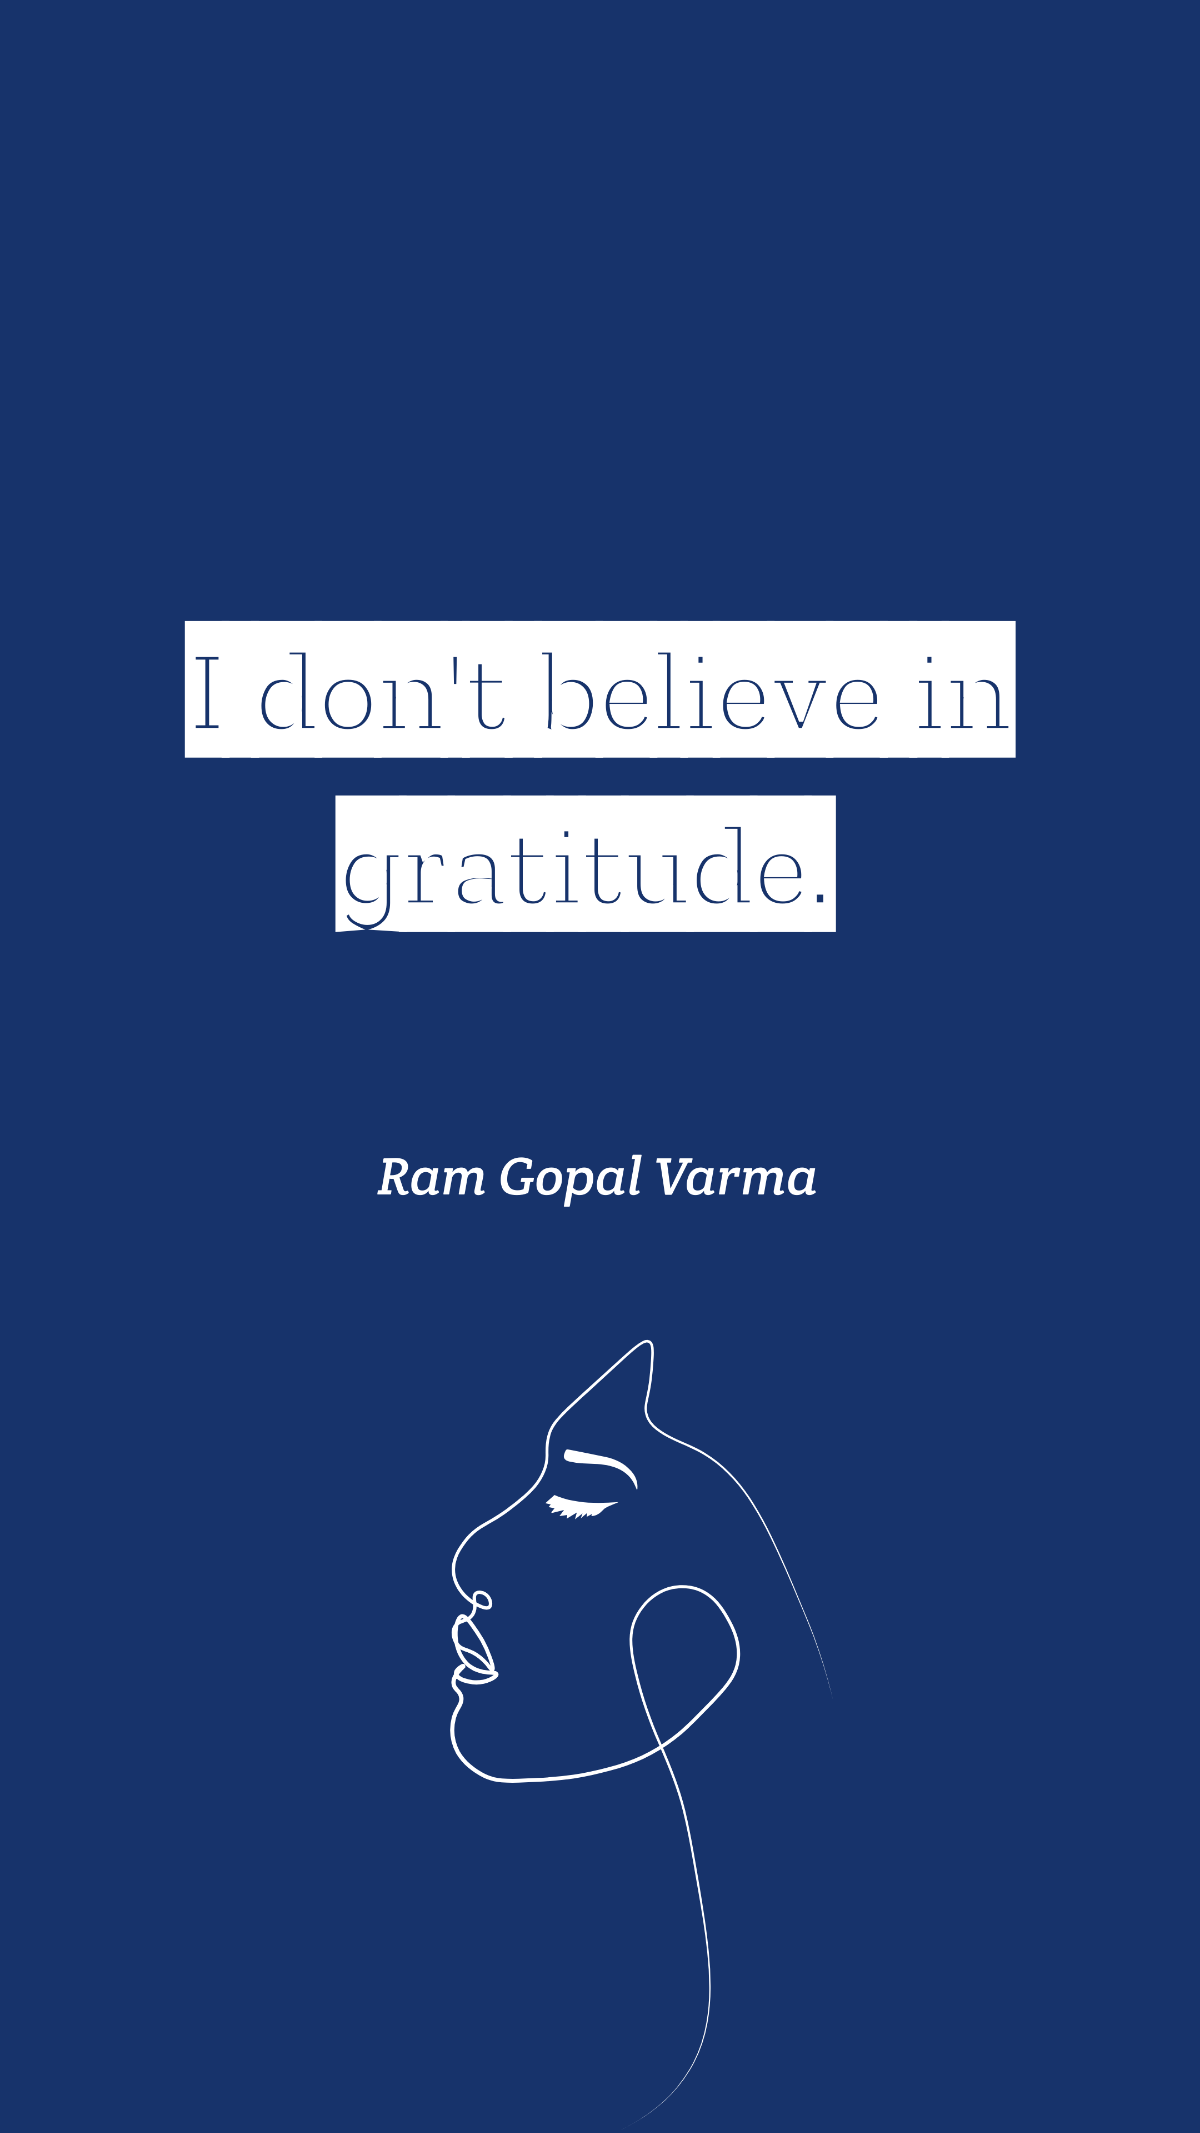 Ram Gopal Varma - I don't believe in gratitude.  Template